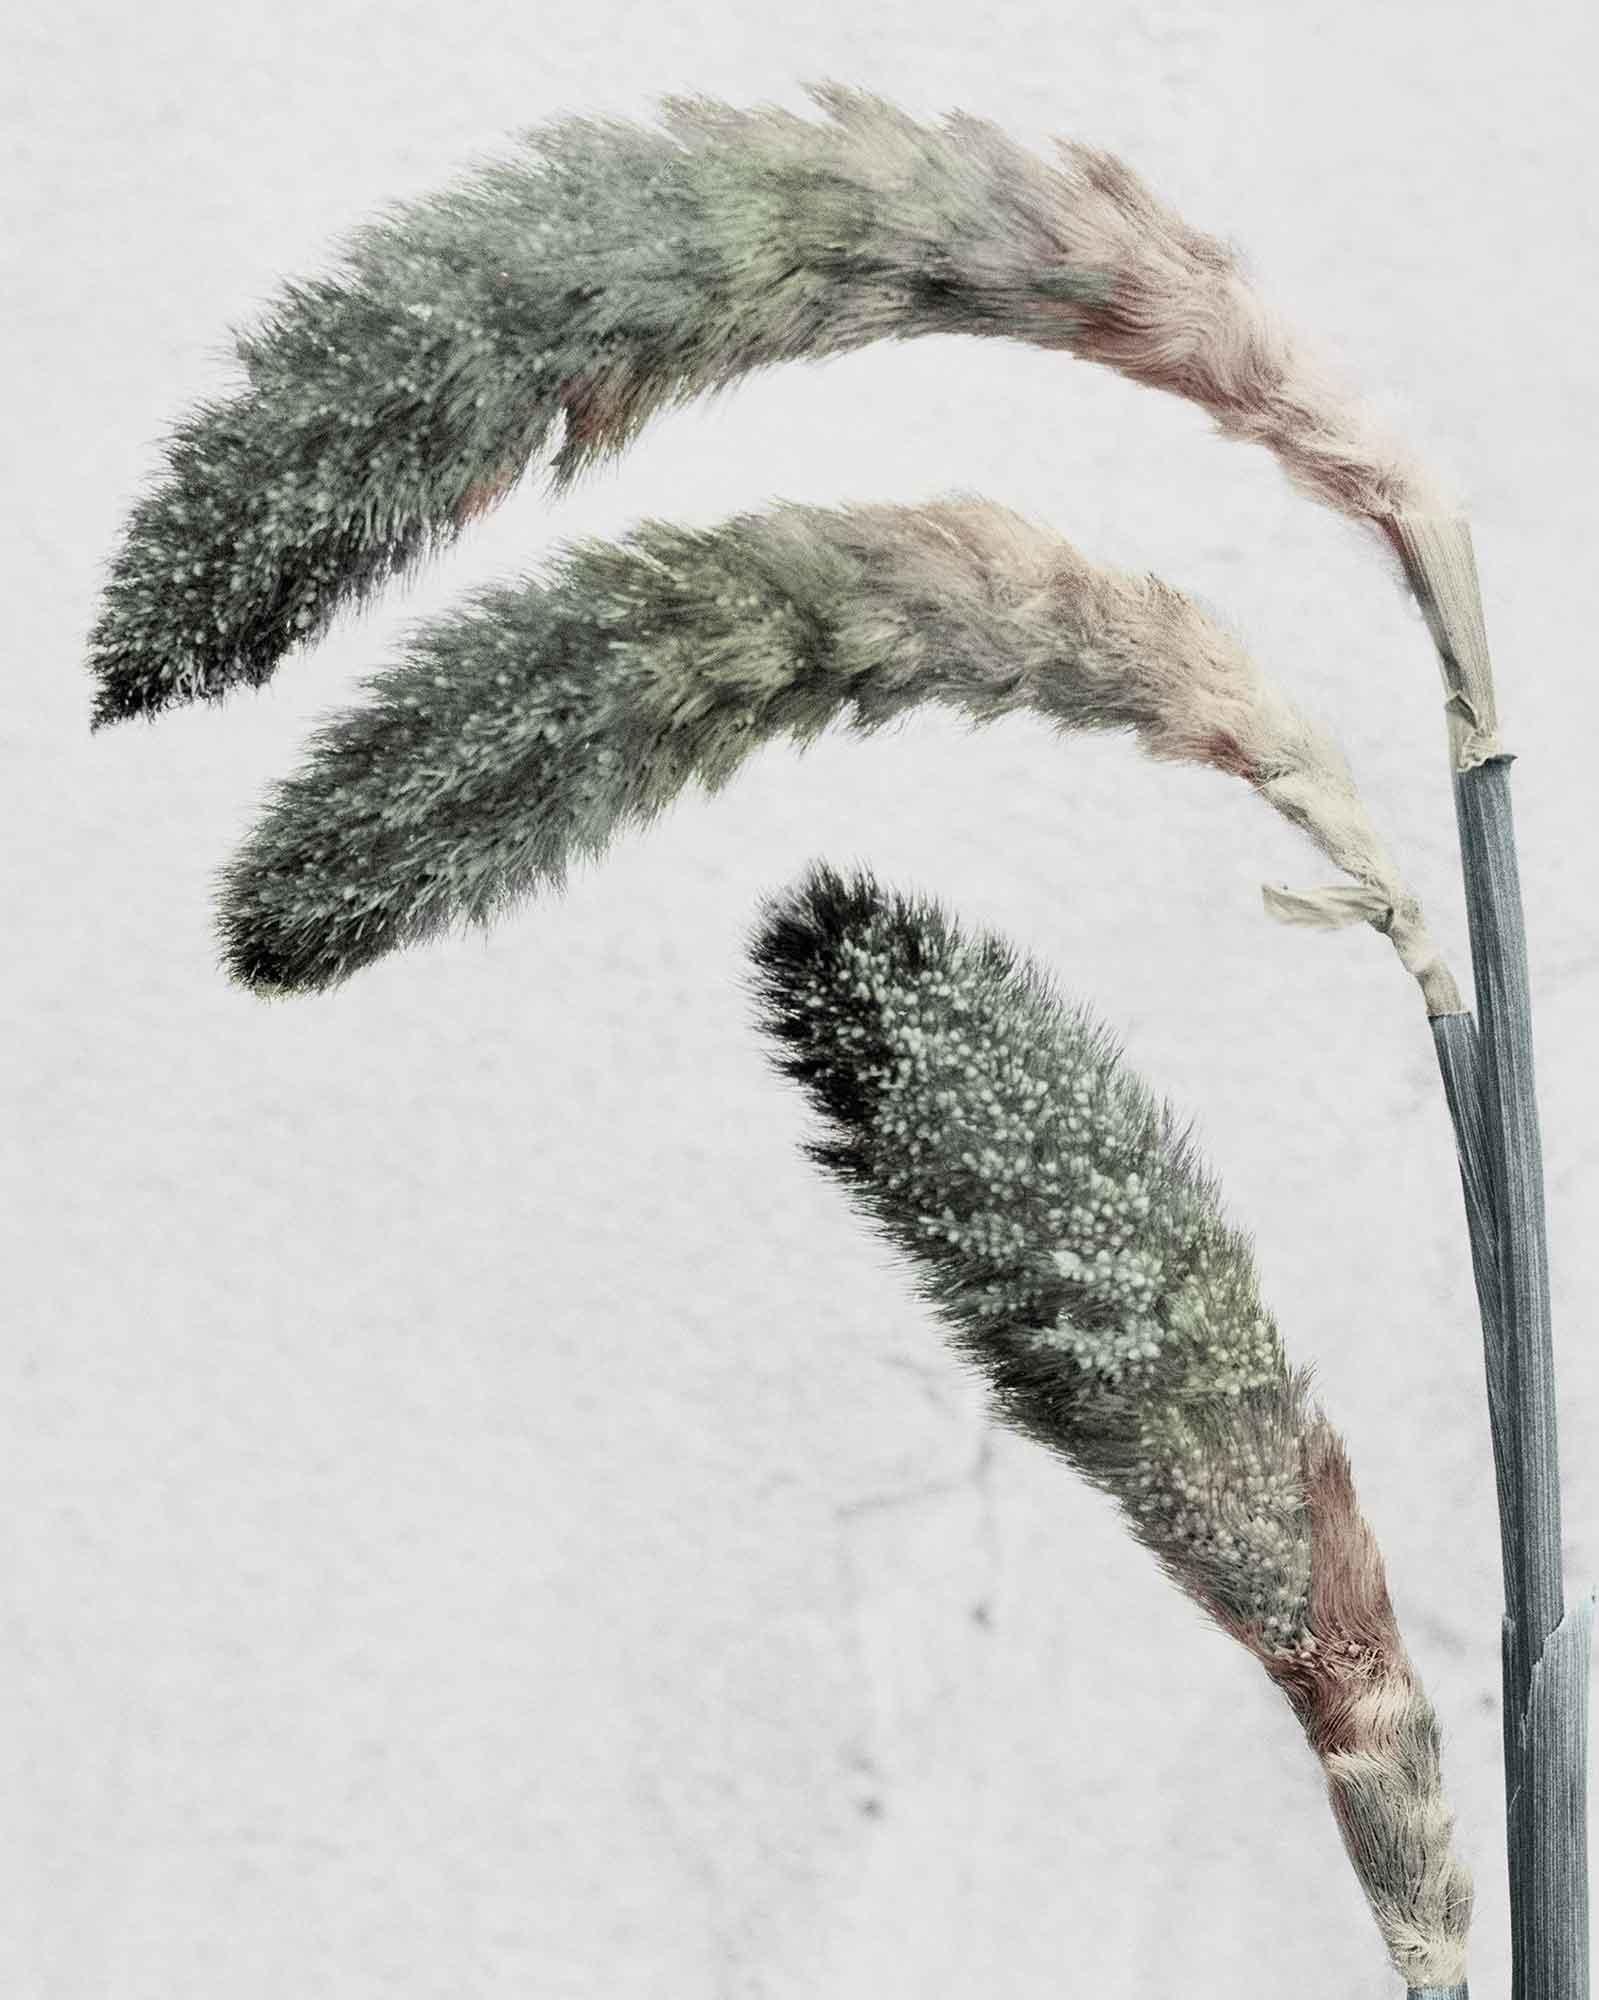 Botanica #22 (Pennisetum) - Photograph by Vee Speers